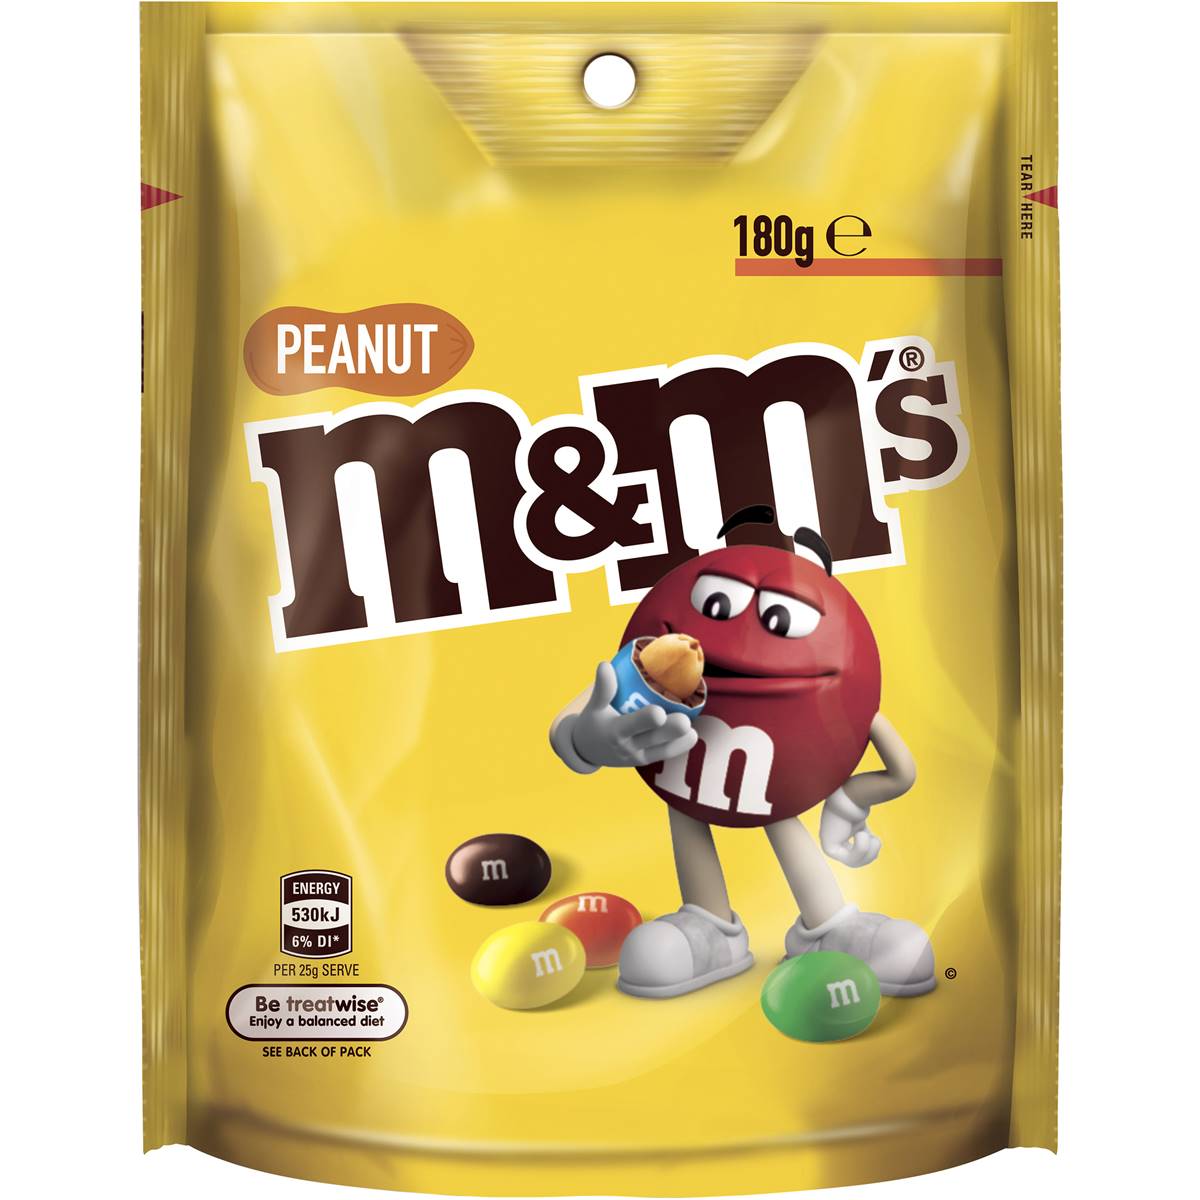 m&ms peanut